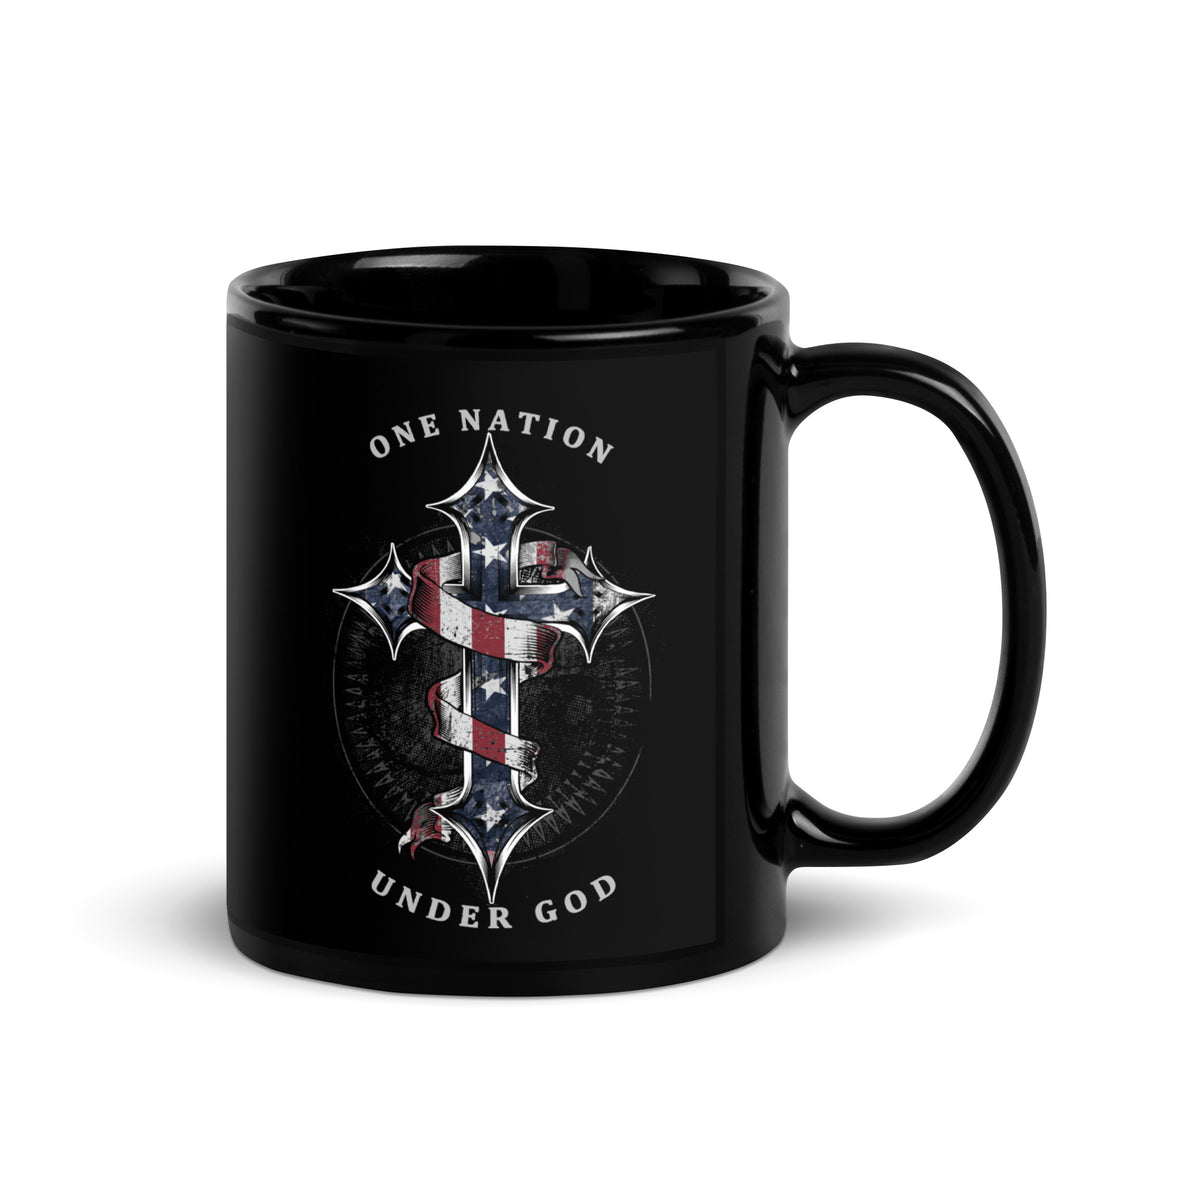 One Nation Under God: Original Mug